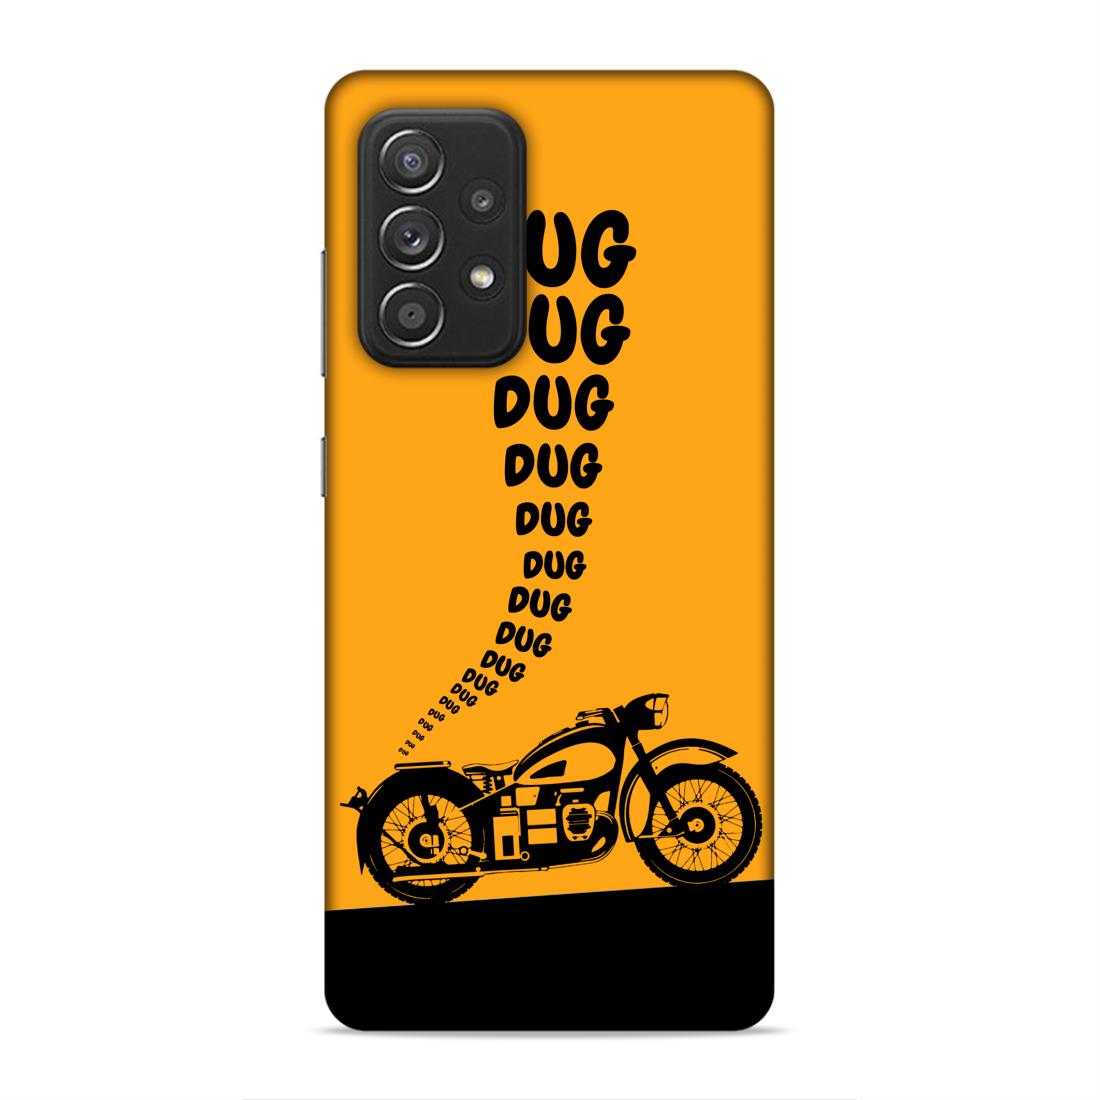 Dug Dug Motor Cycle Hard Back Case For Samsung Galaxy A52 / A52s 5G